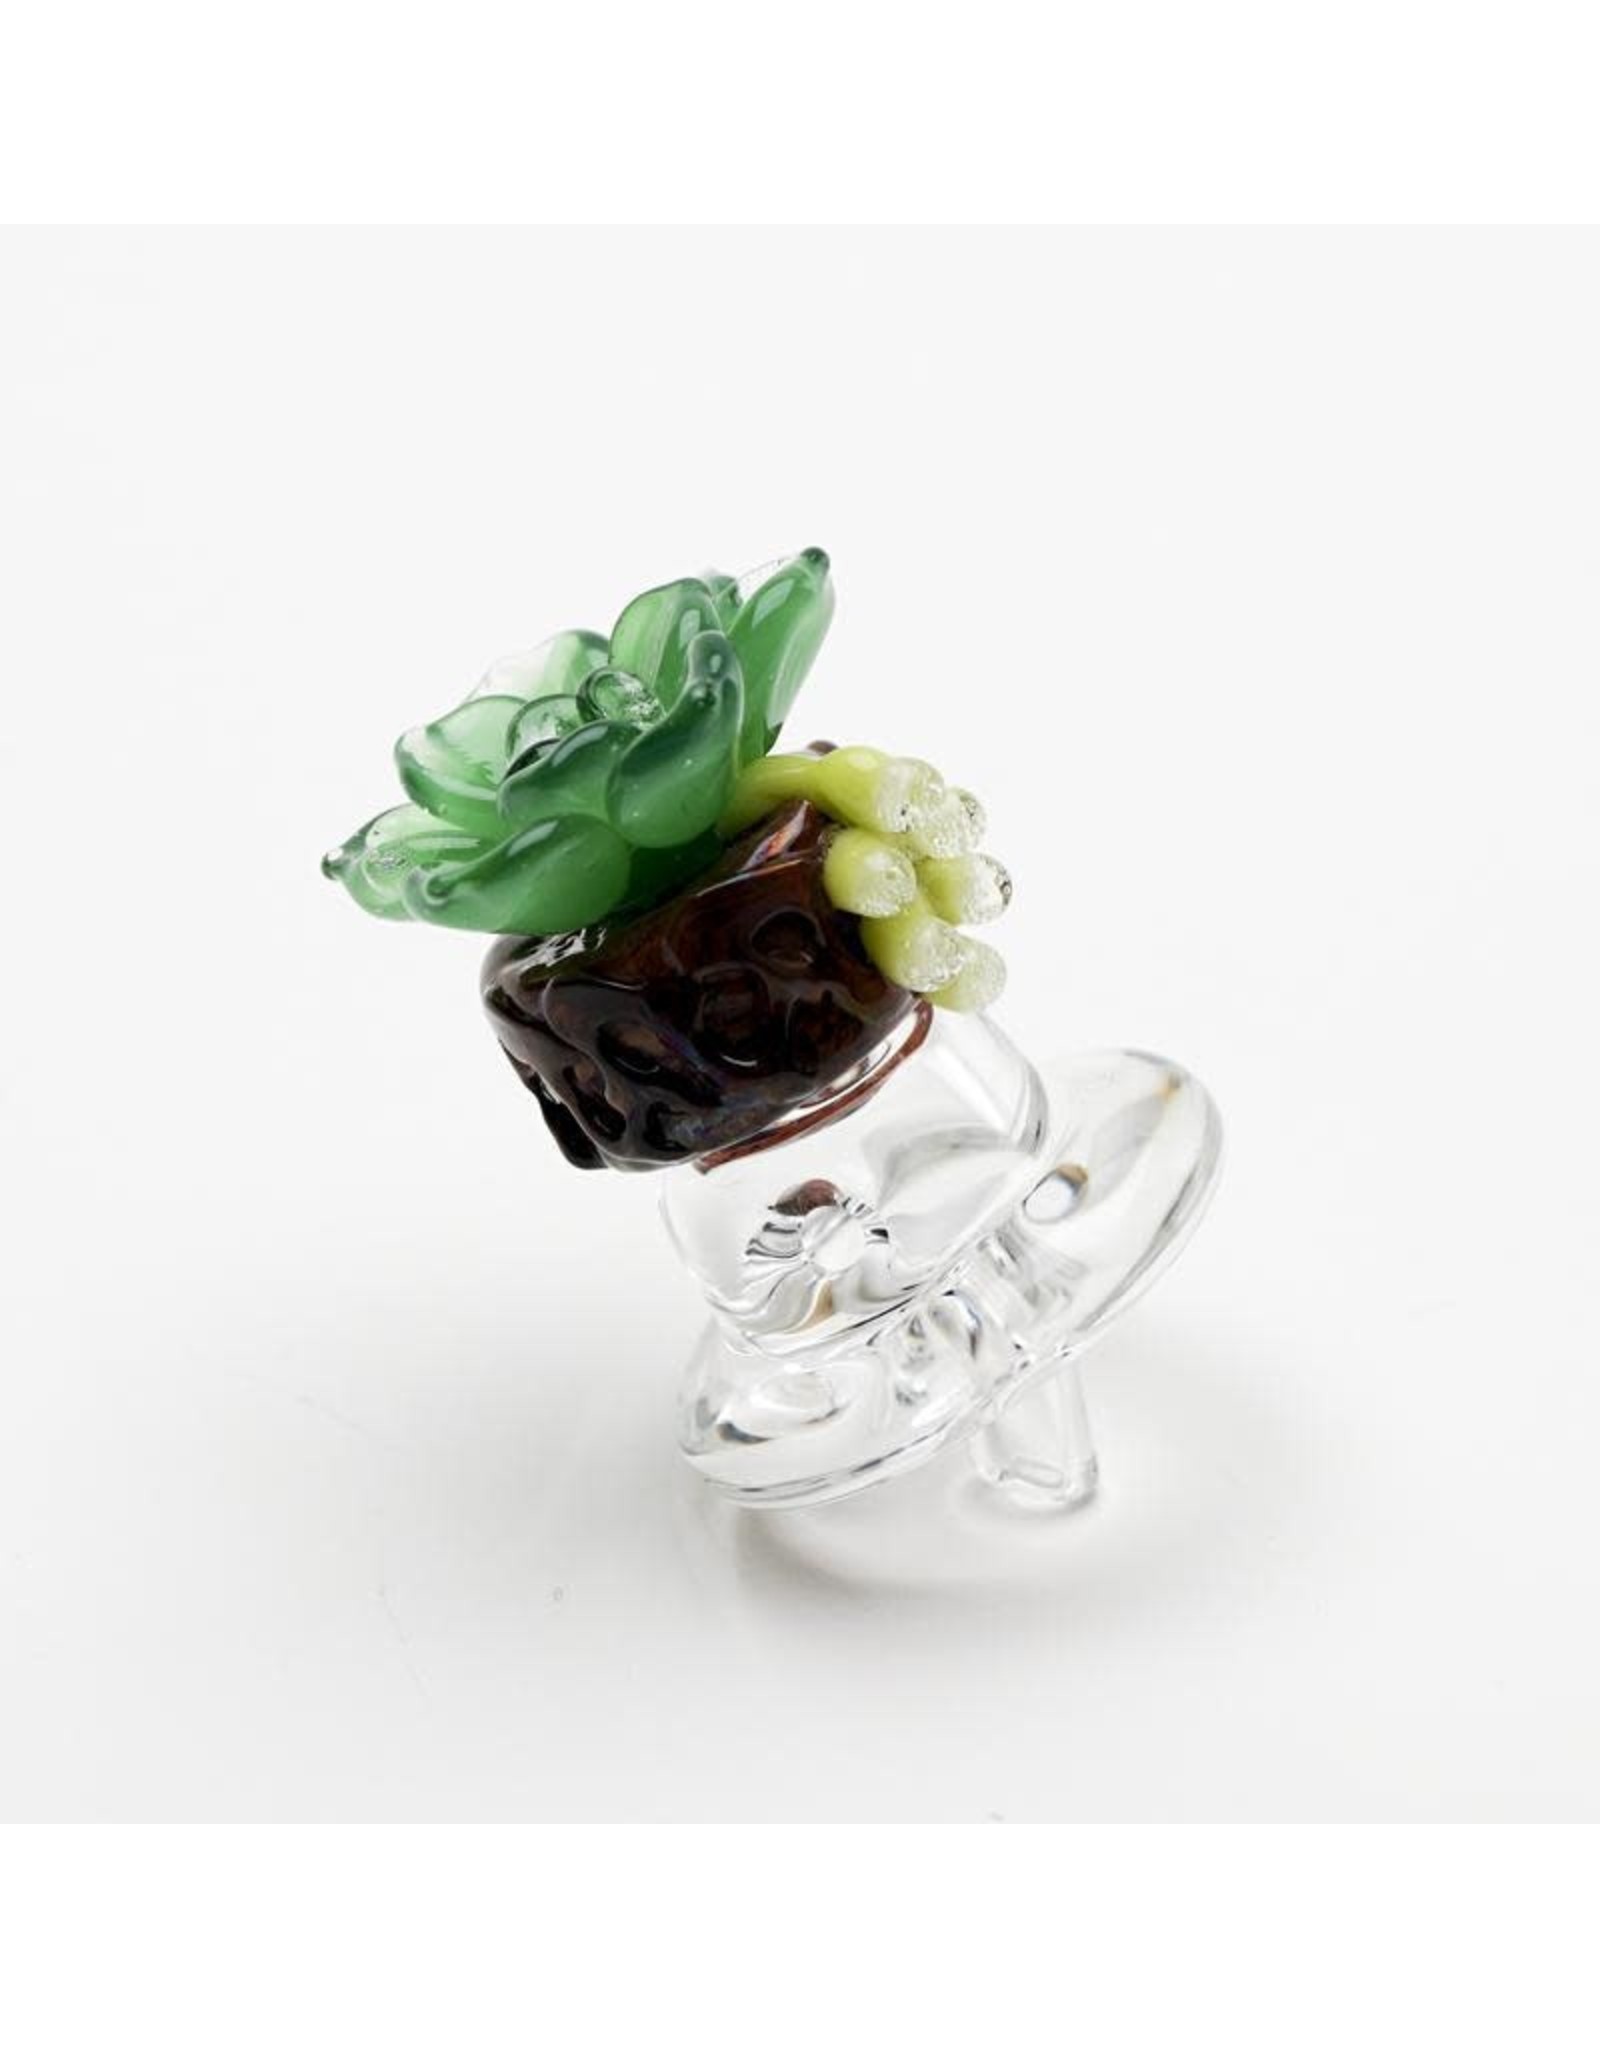 Empire Glass Succulent Carb Cap